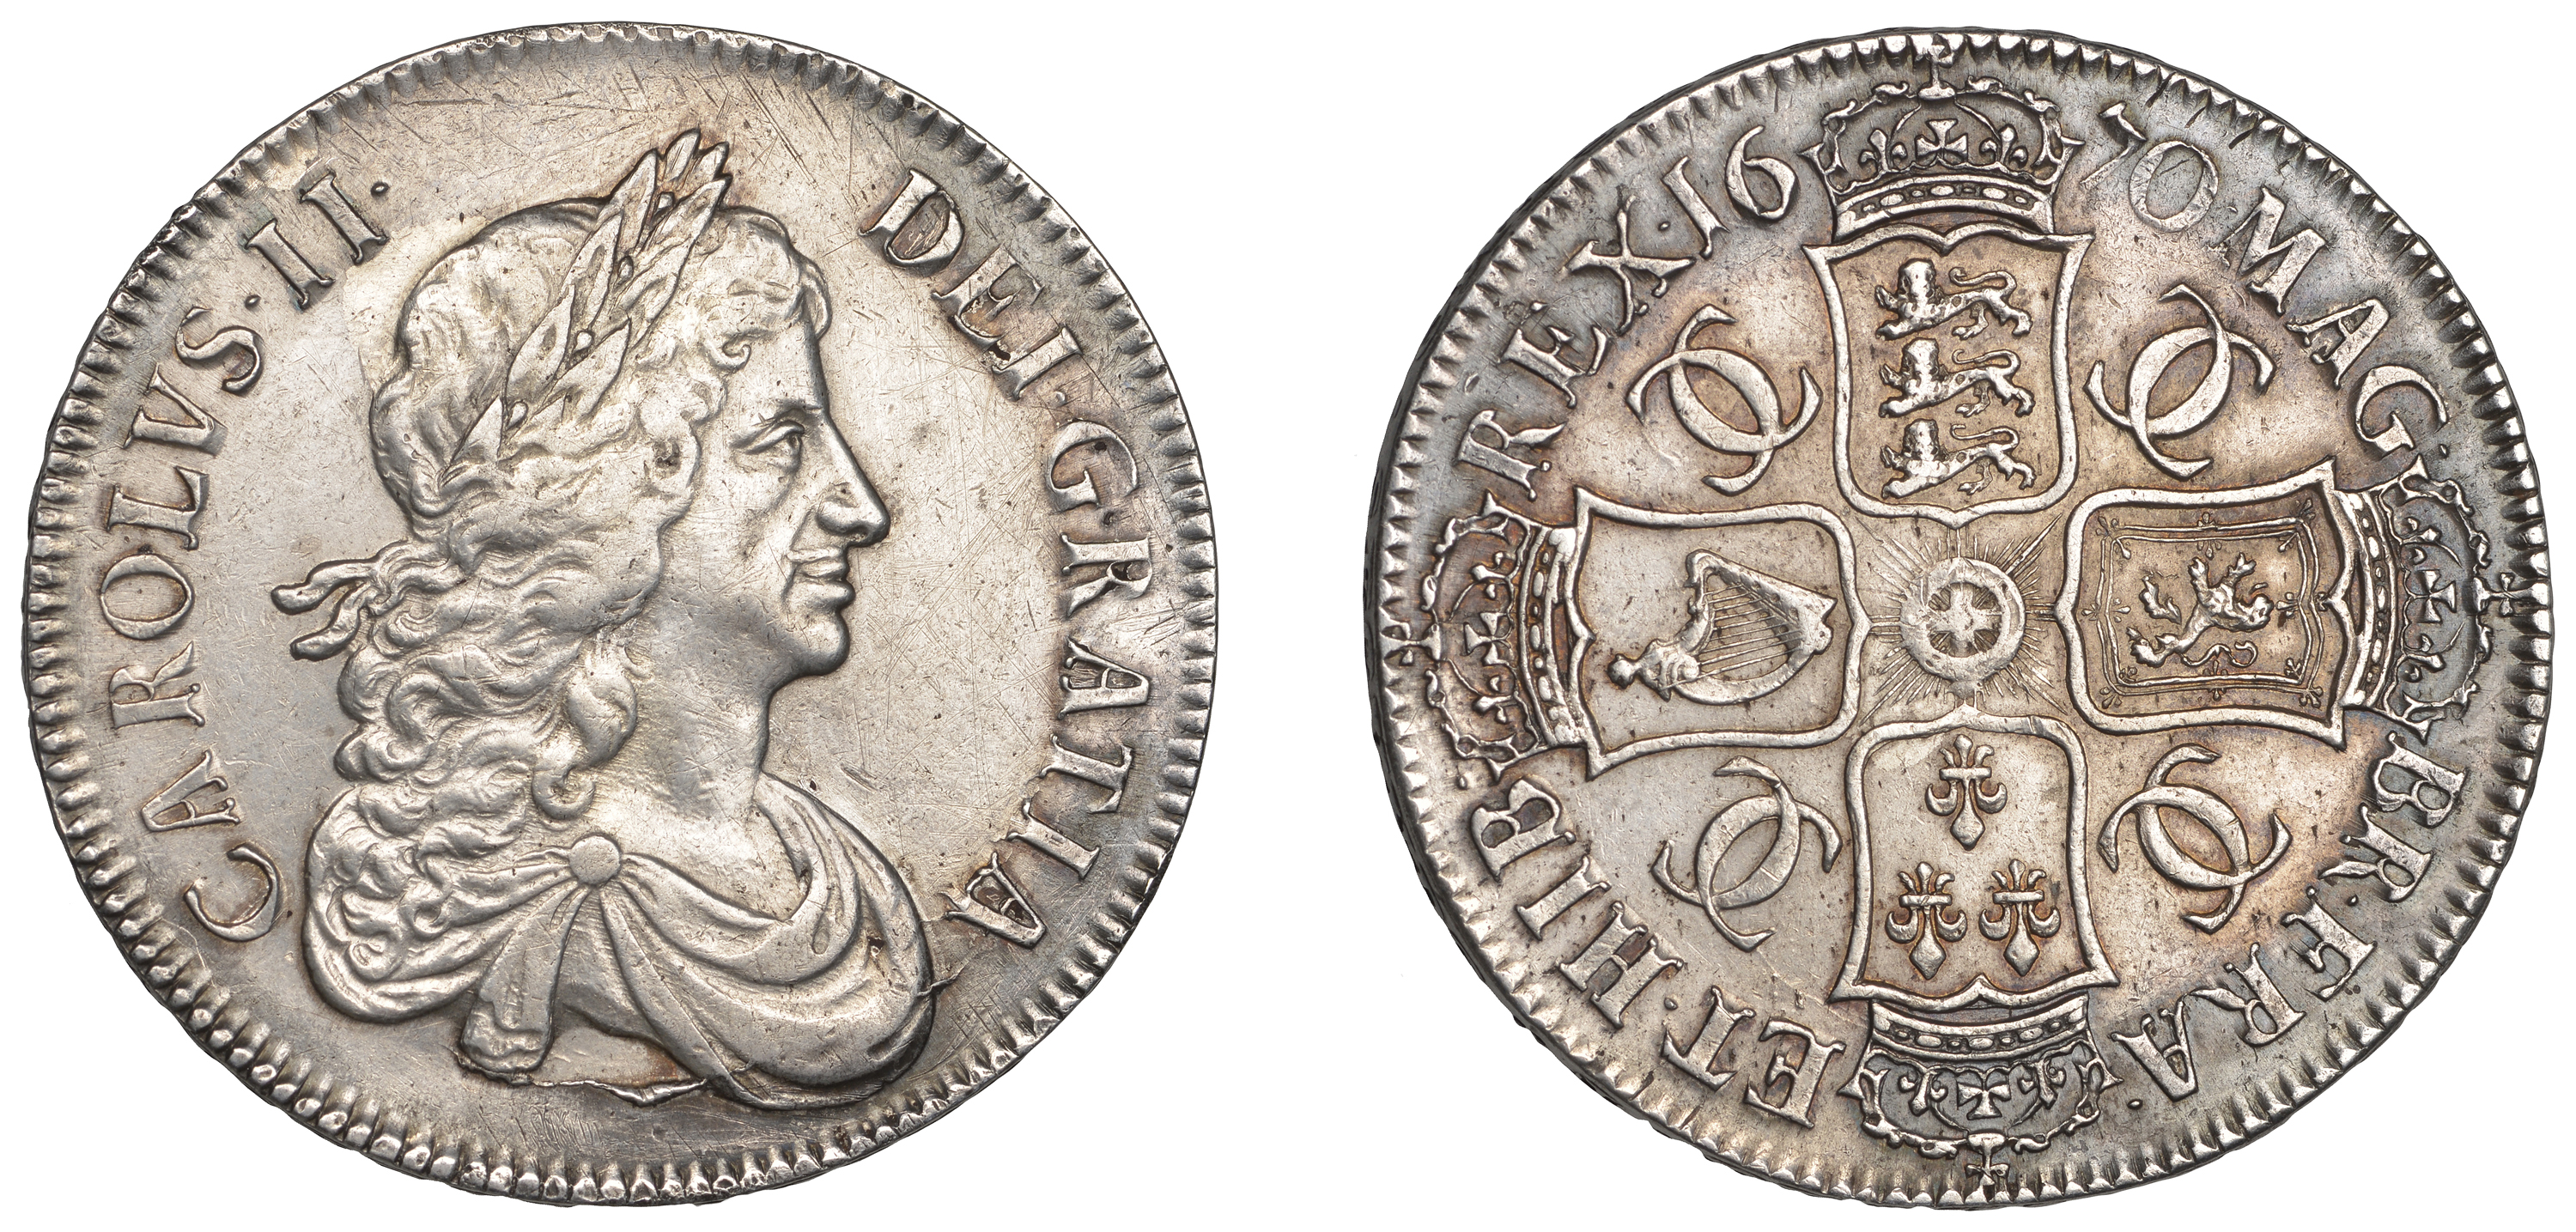 Charles II (1660-1685), Crown, 1670, second bust, edge vicesimo secvndo (ESC 380; S 3357). C...